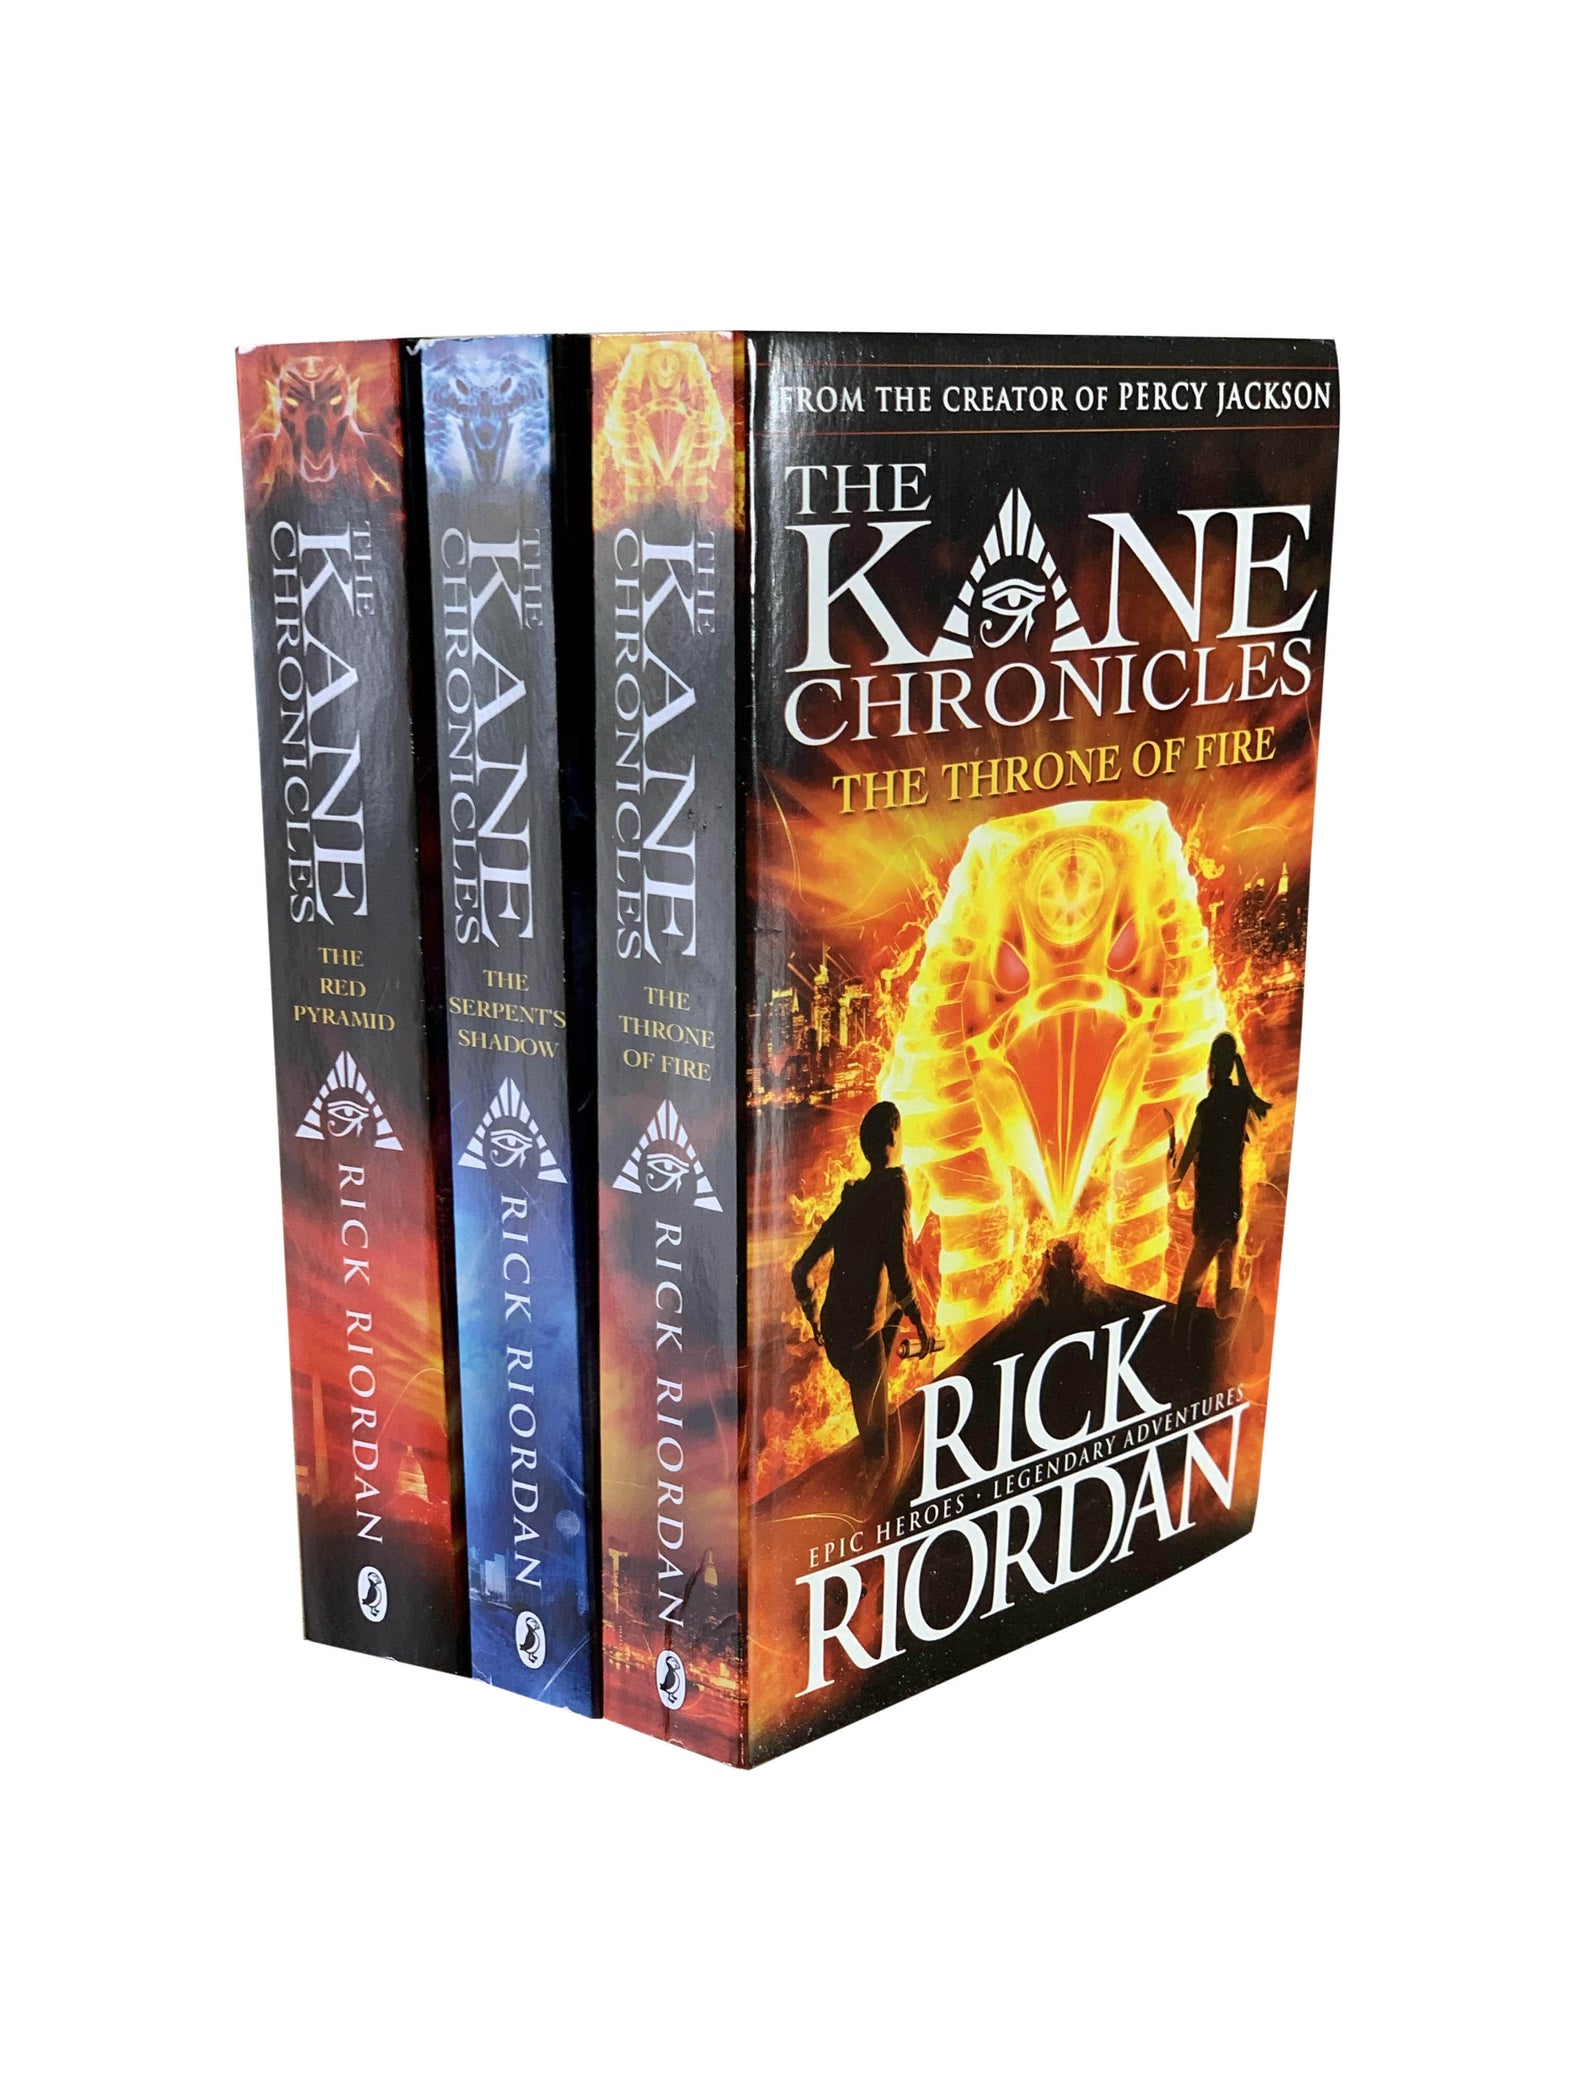 The Kane Chronicles Box Set by Rick Riordan